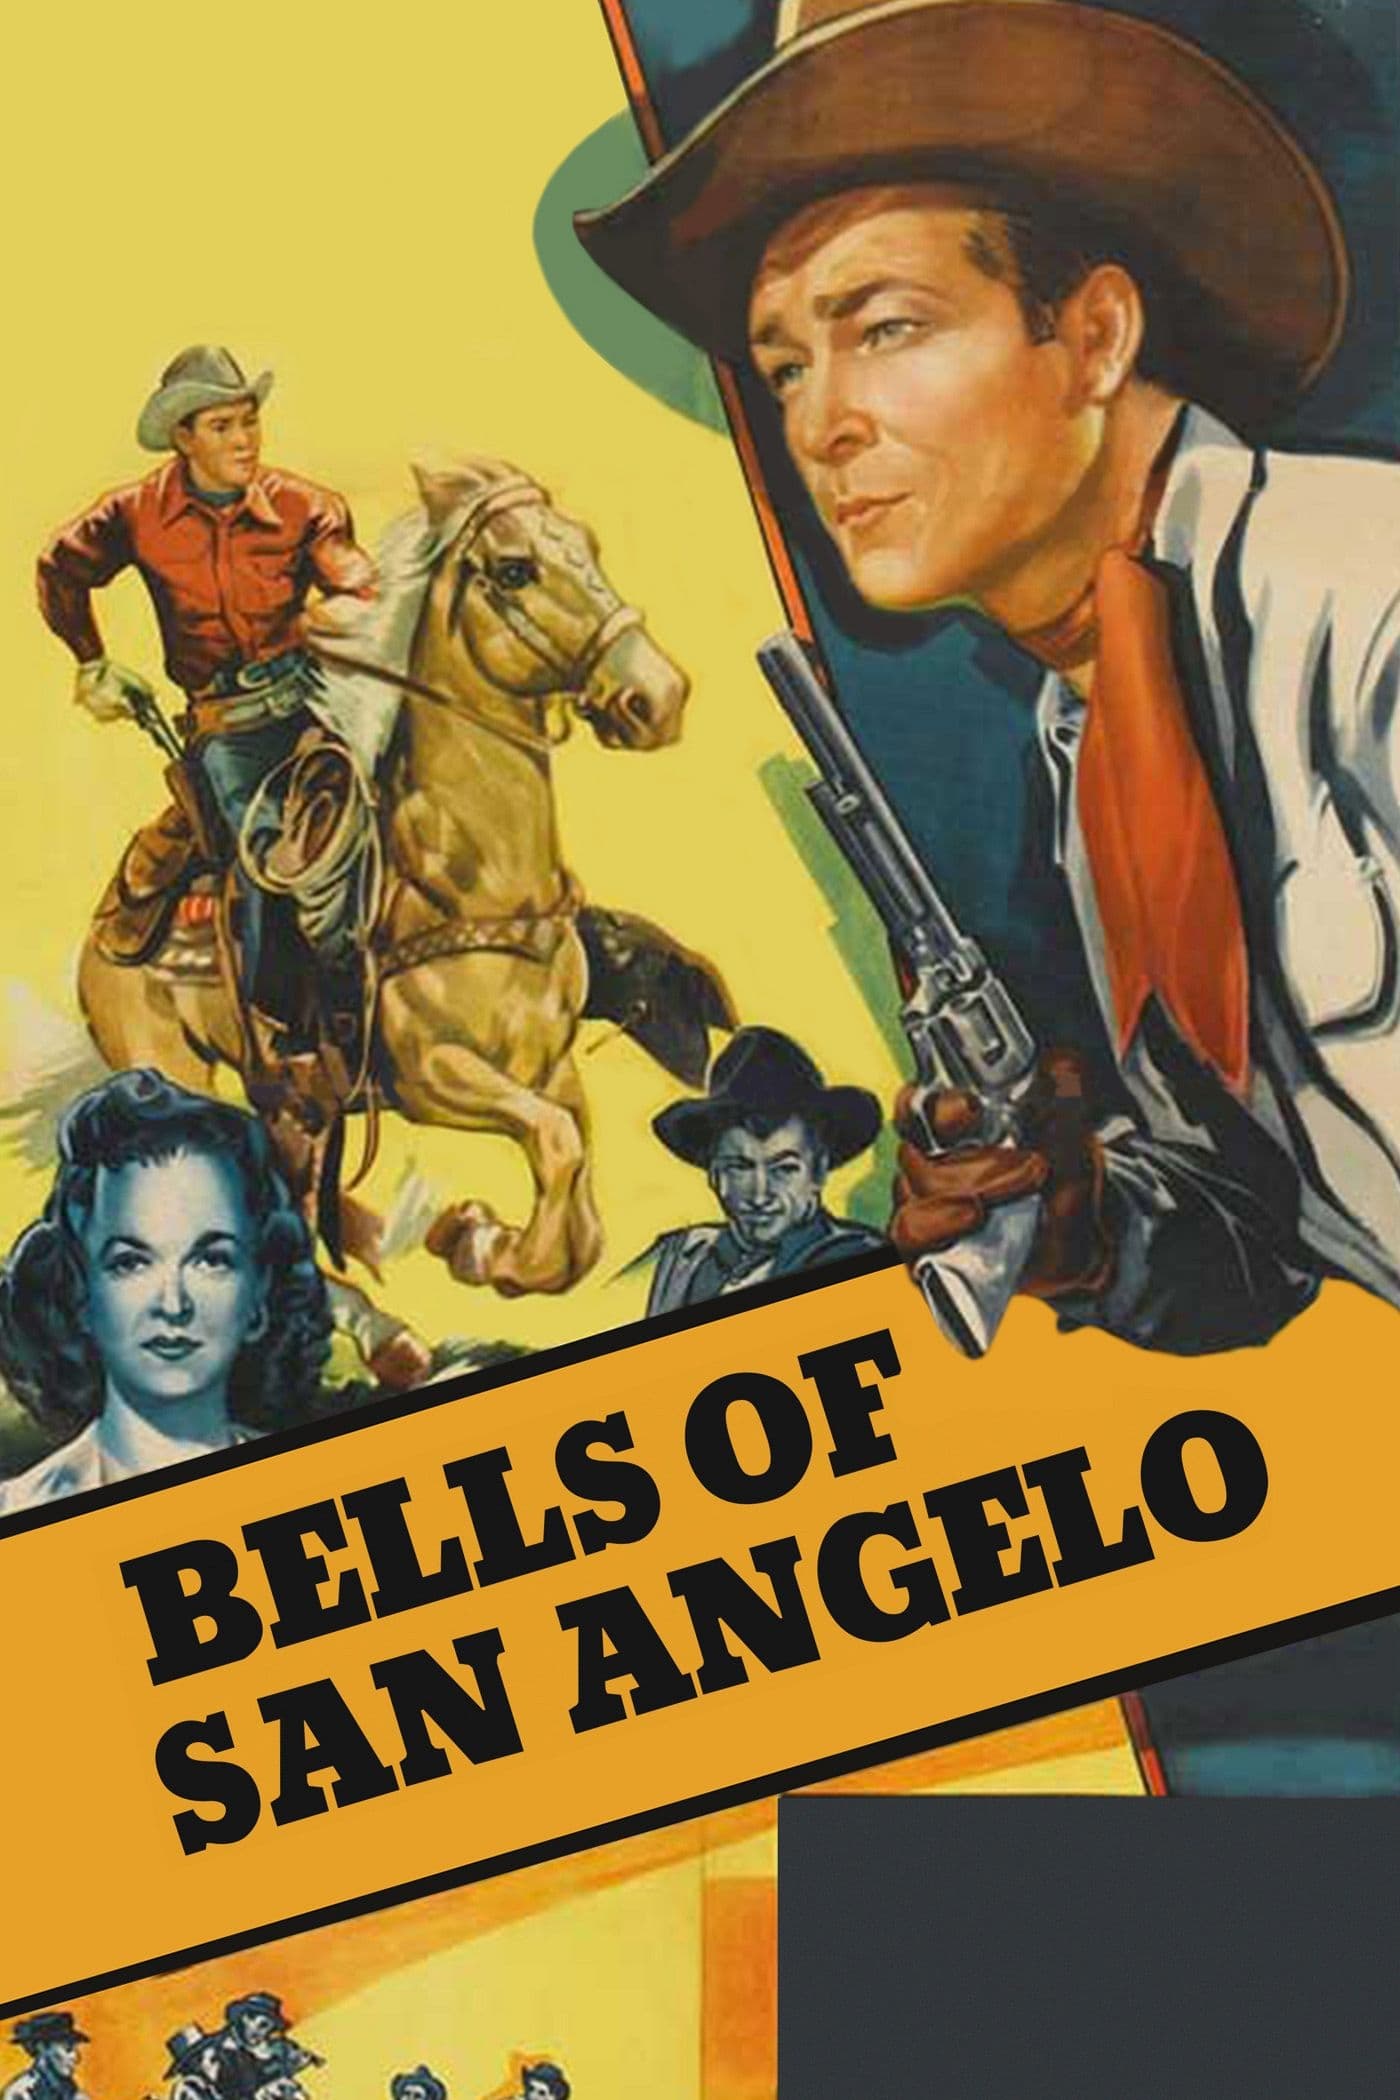 Bells of San Angelo film